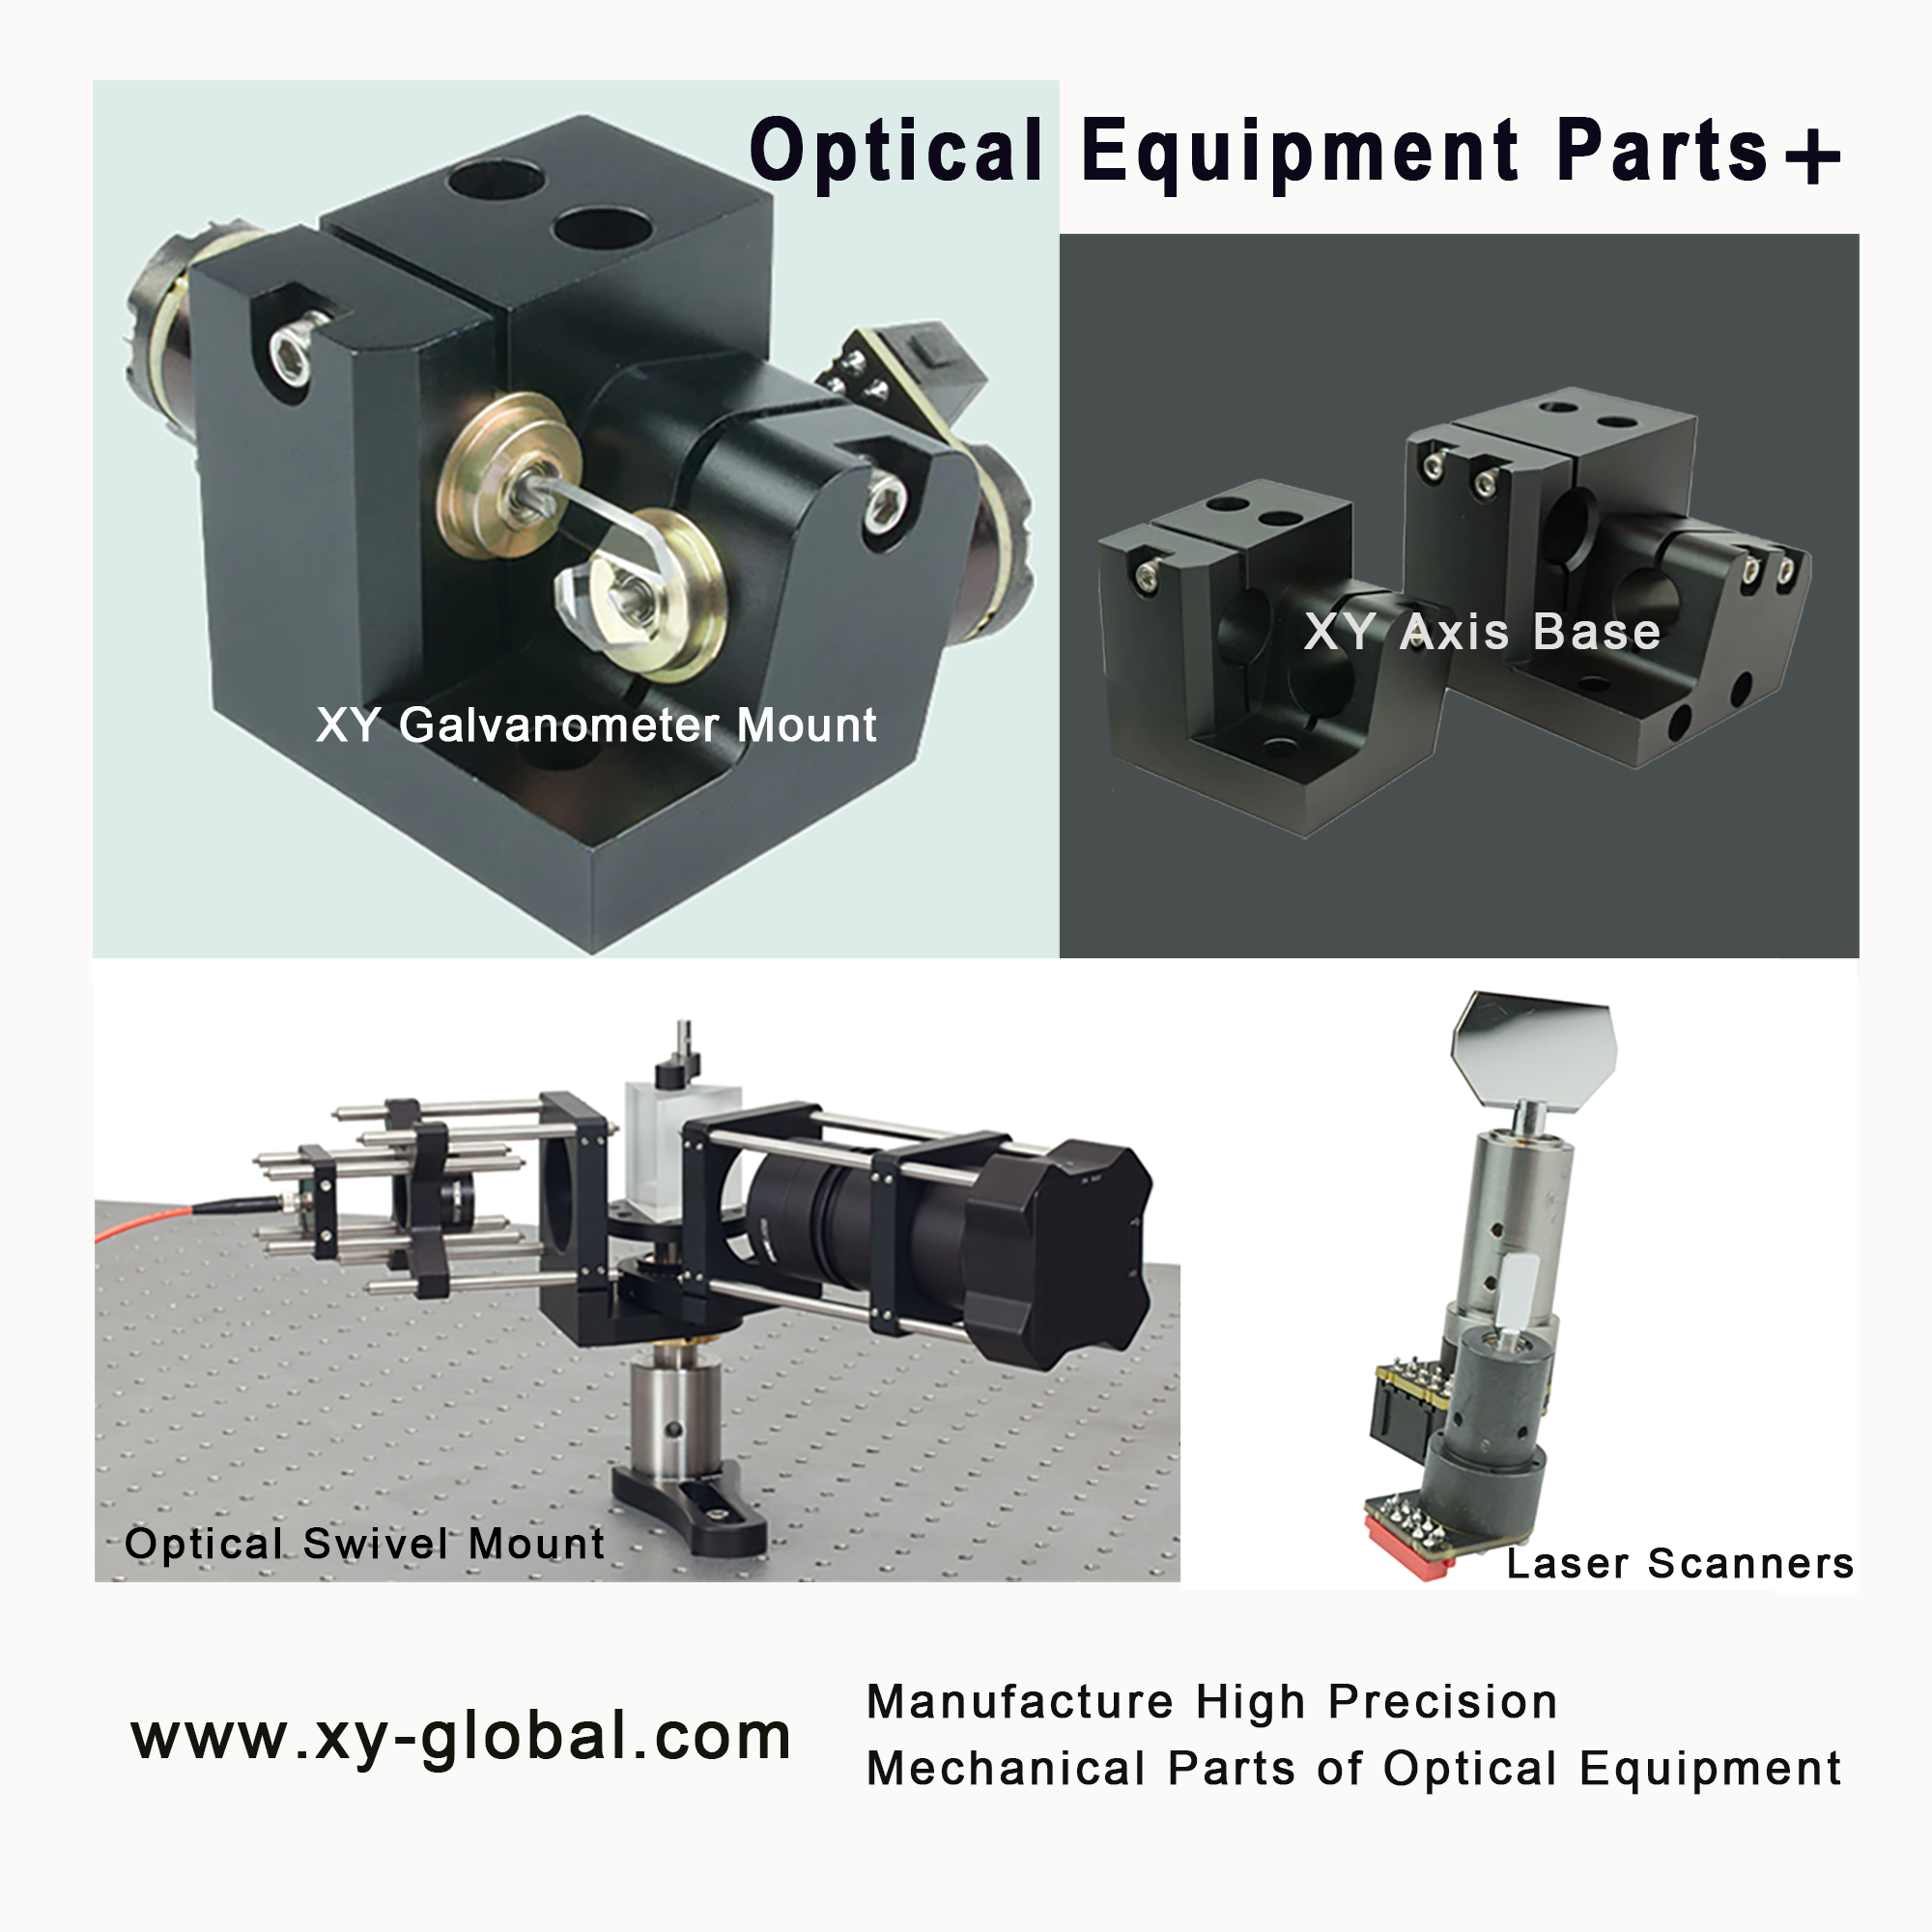 Optical Equipment Parts